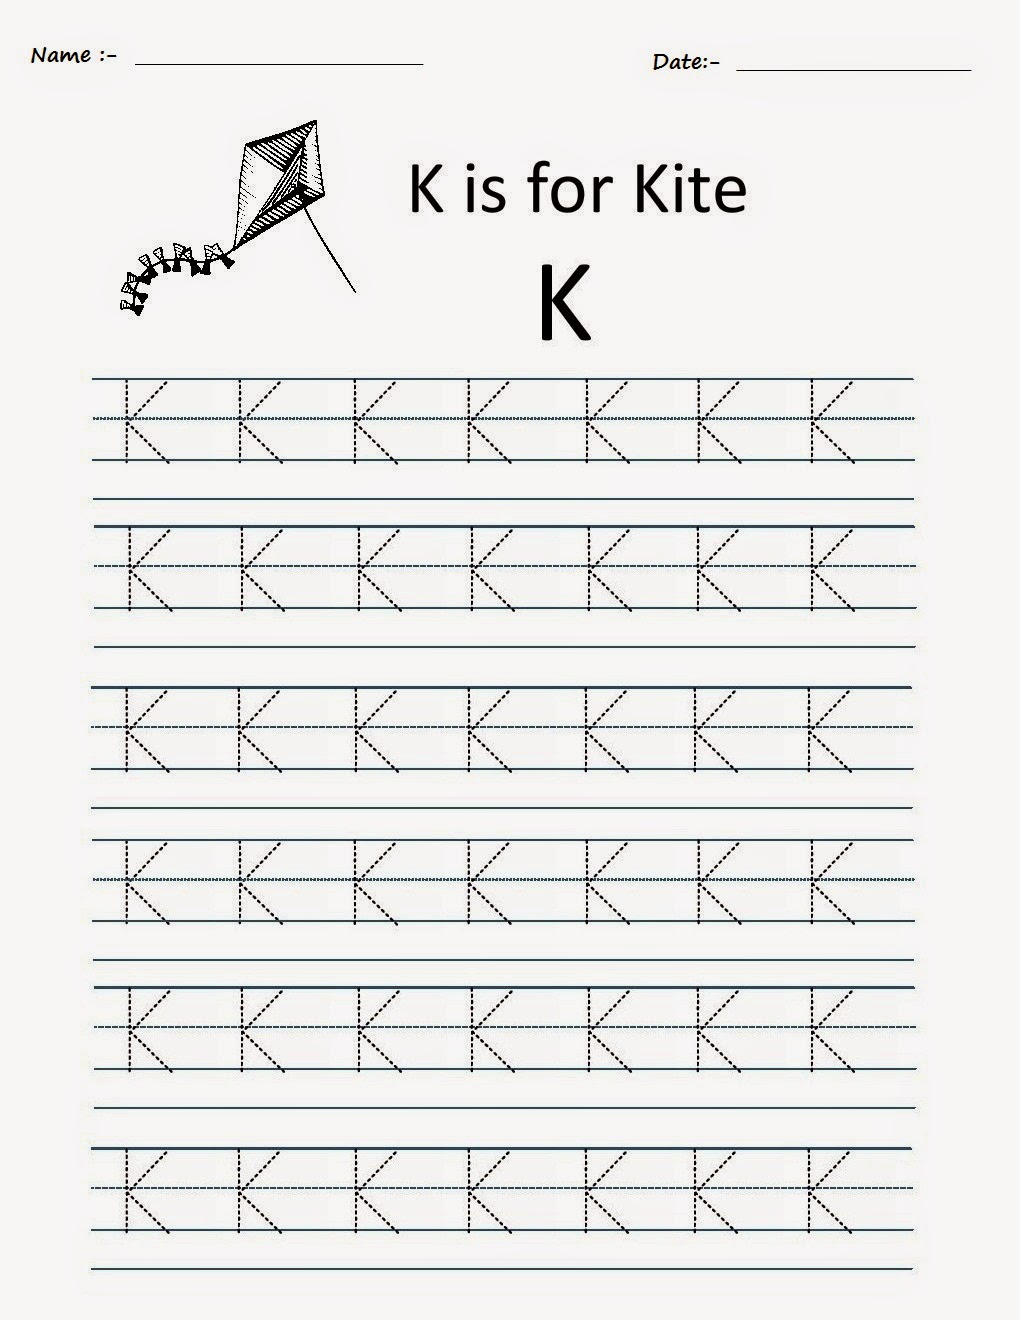 letter-tracing-worksheets-letters-k-t